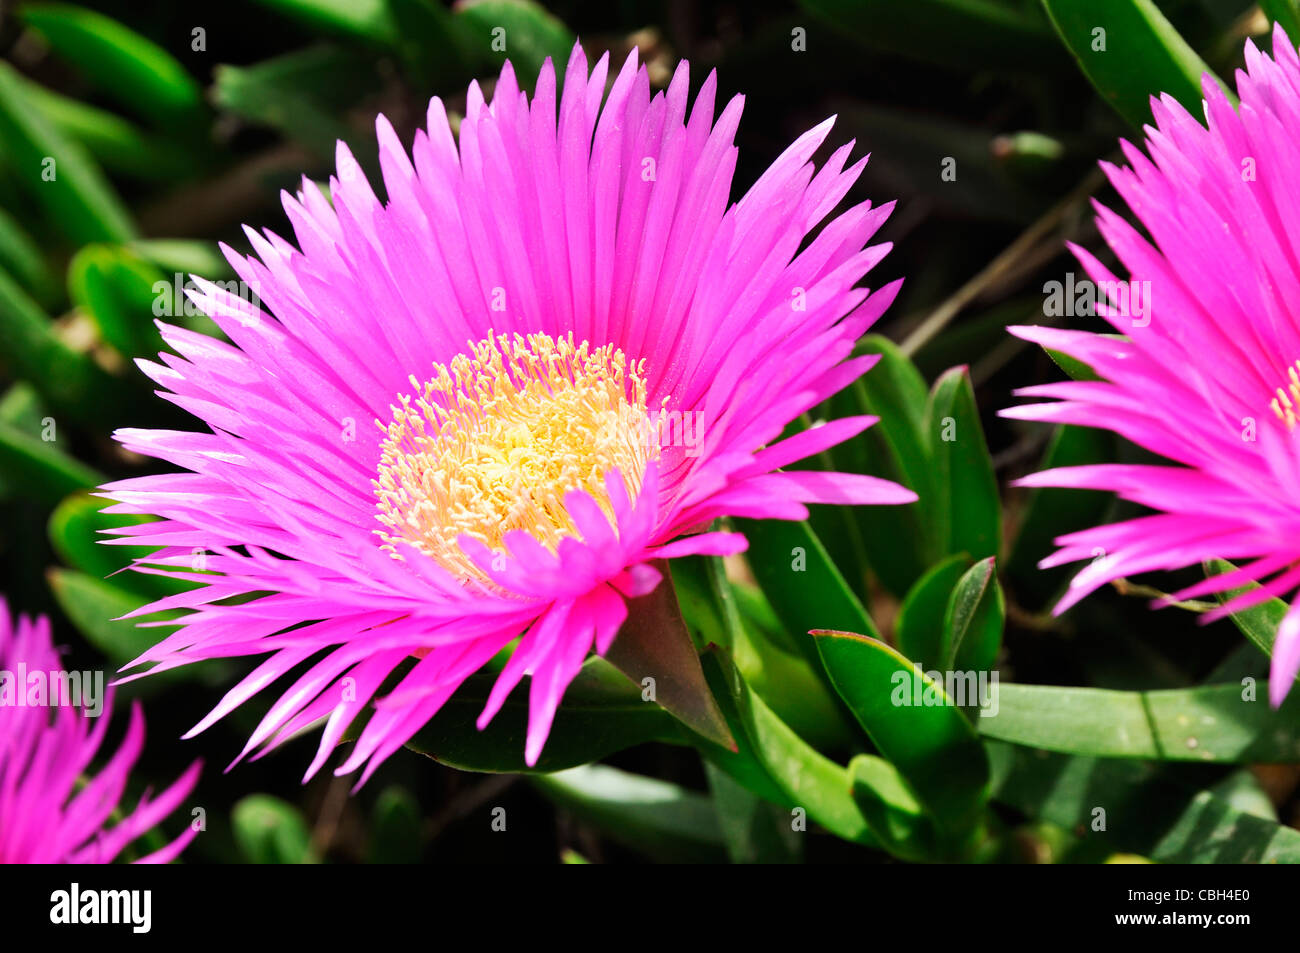 Pink flowers, Stromboli Island, Italy, Europe Stock Photo